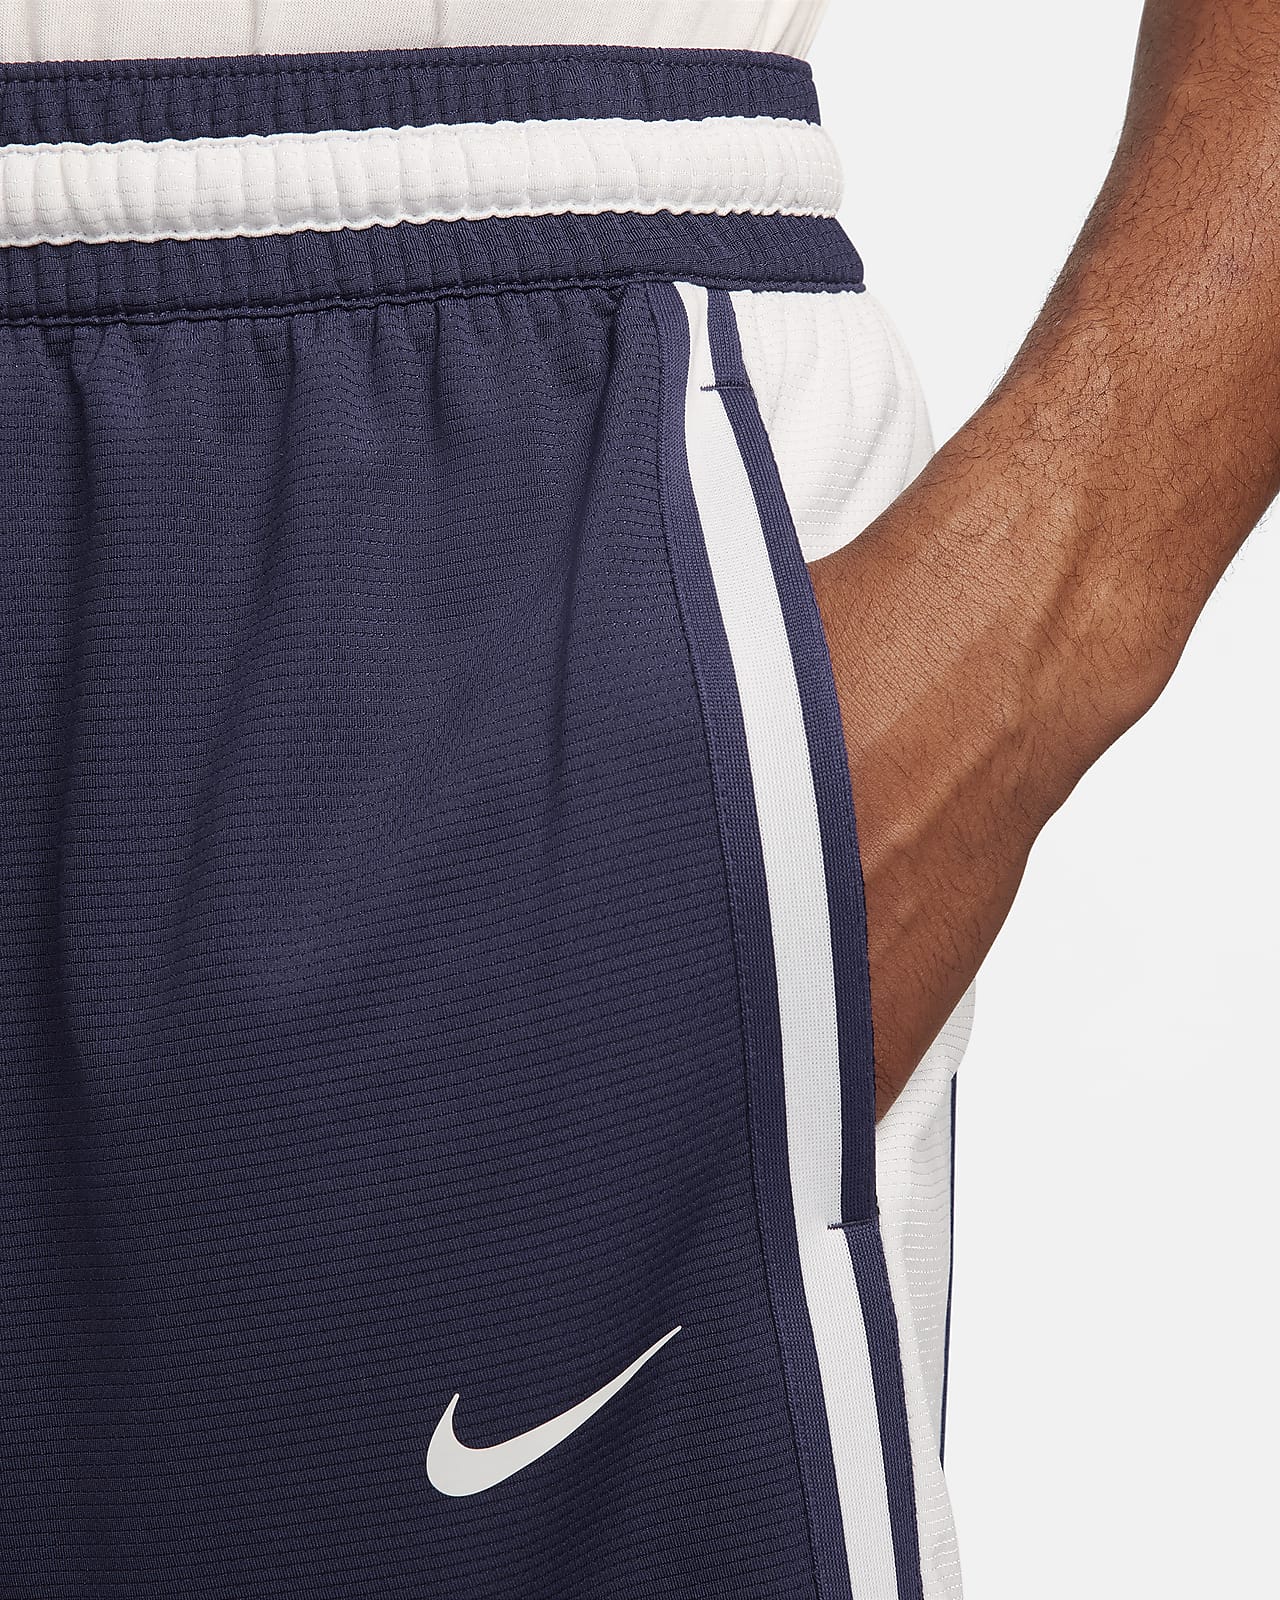 Nike Men's DNA 8 Basketball Shorts